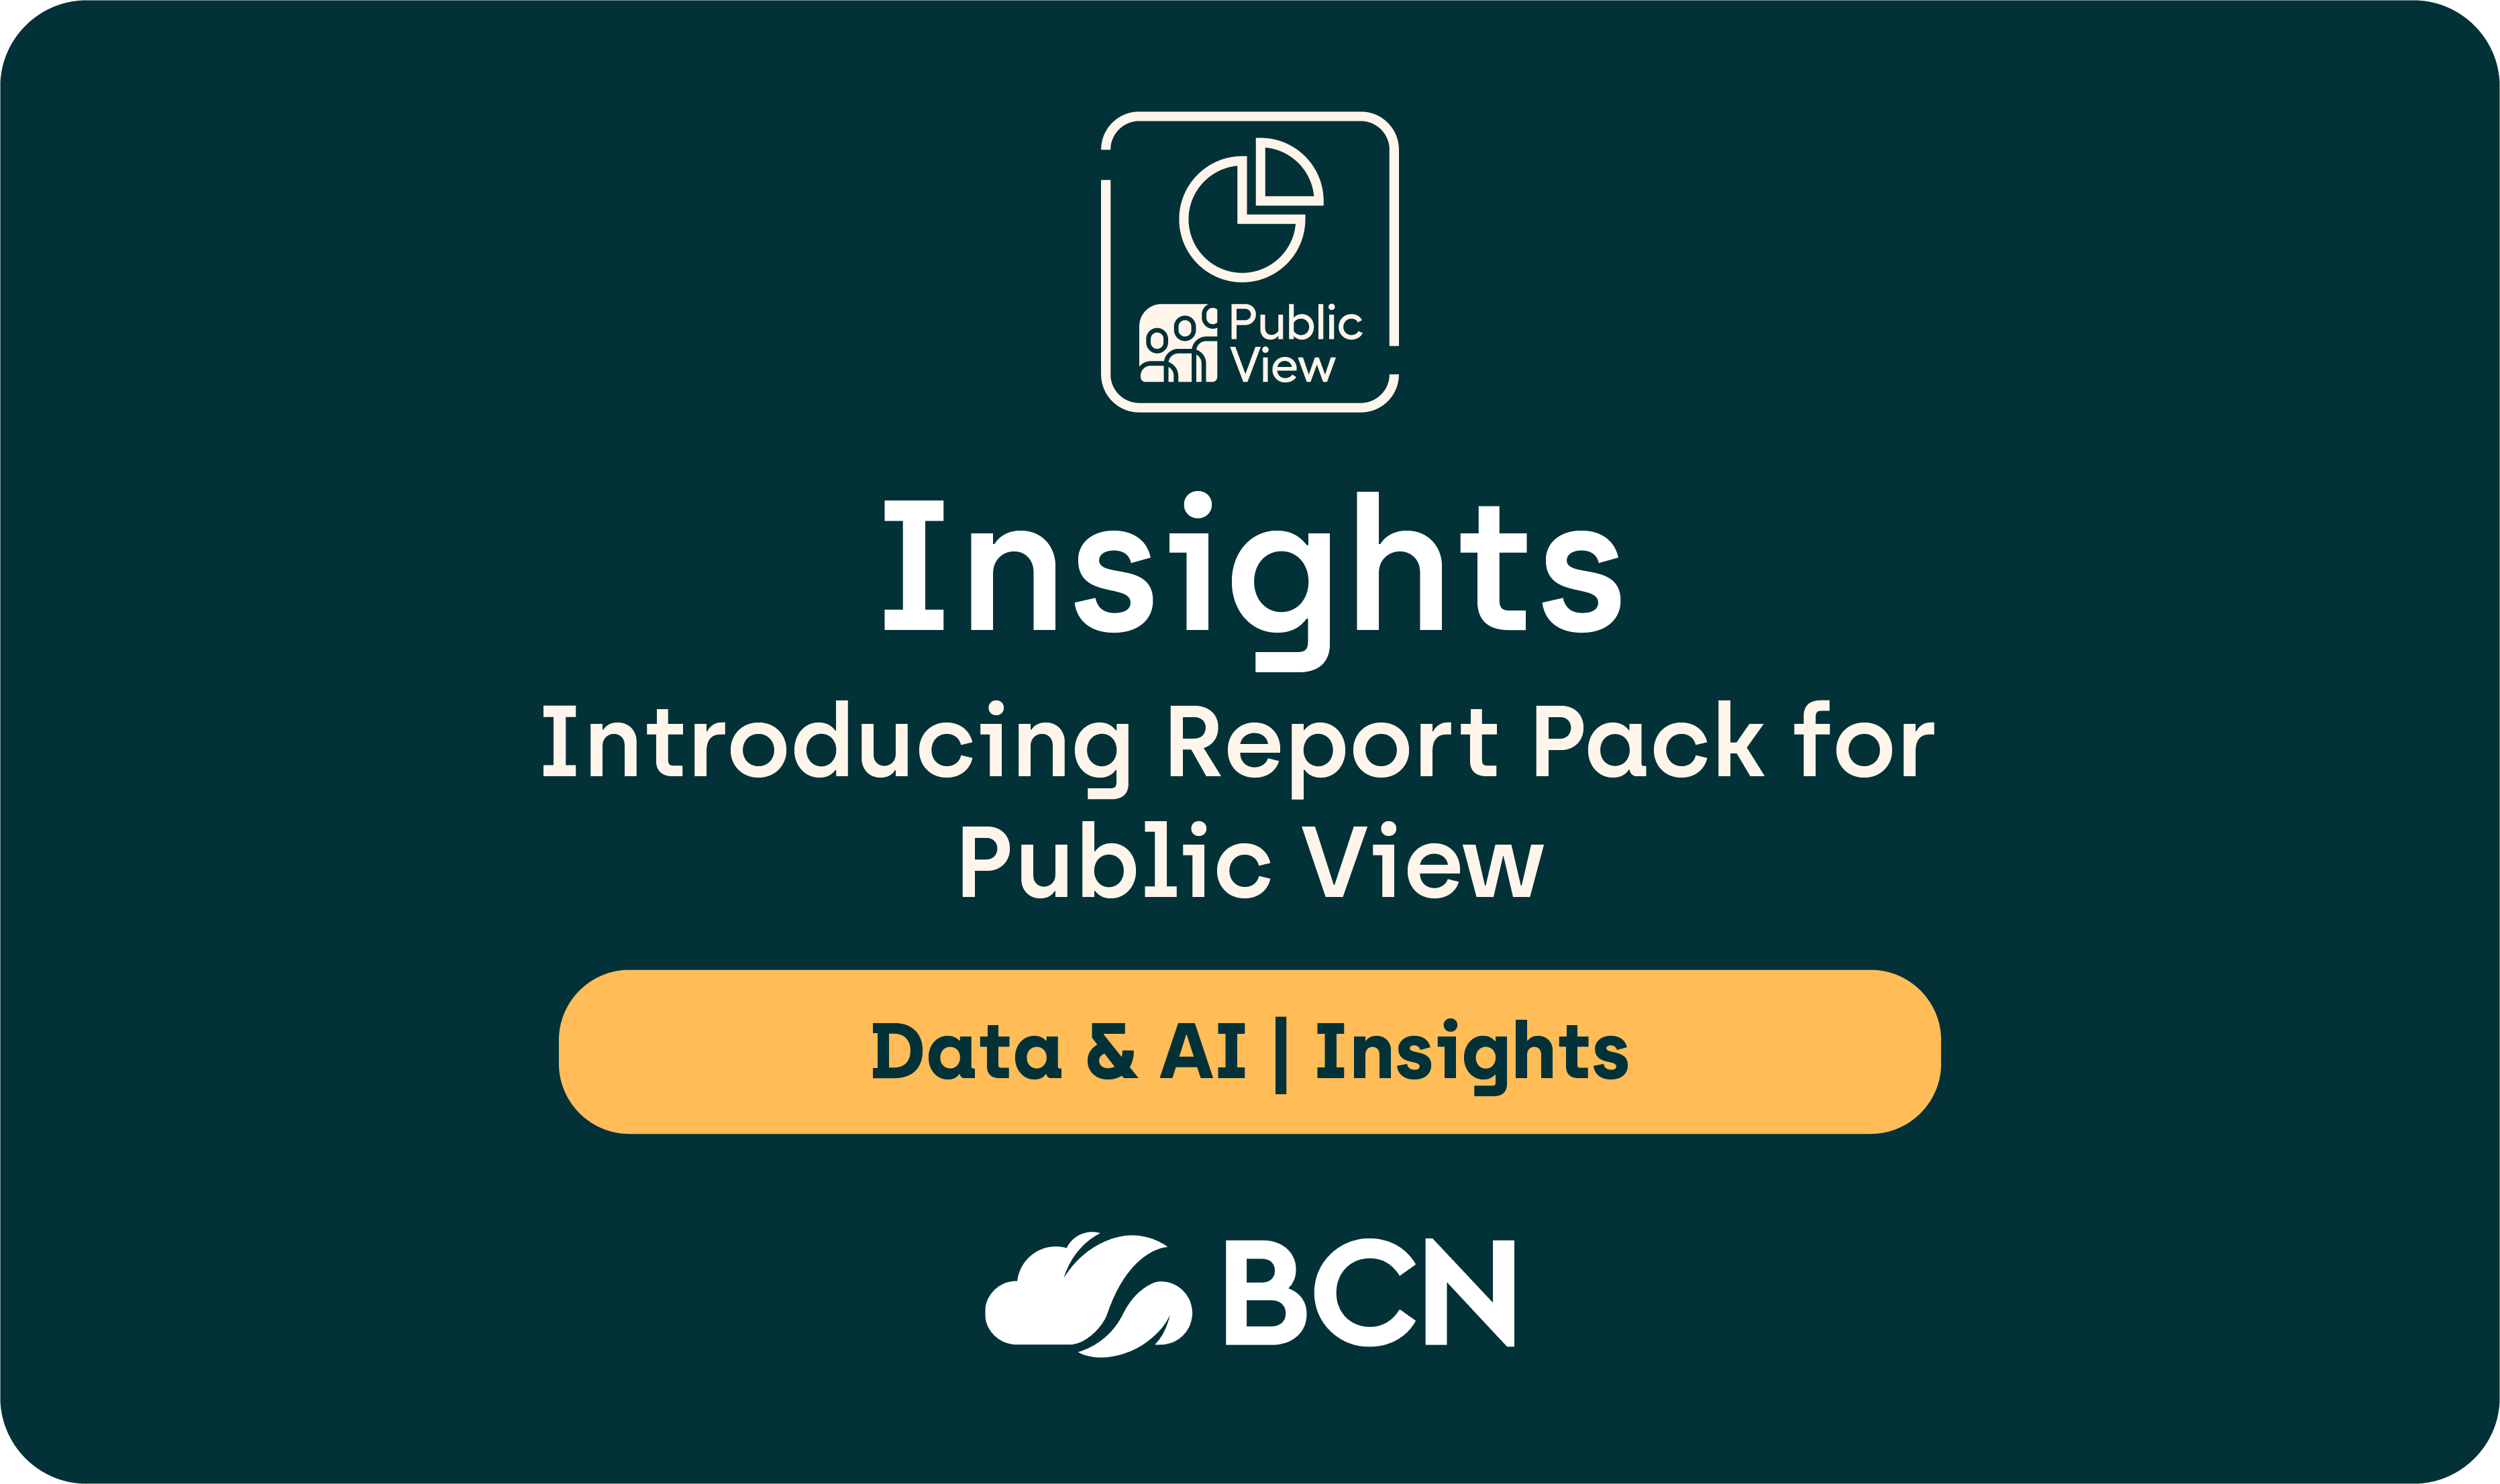 Public View Report Pack